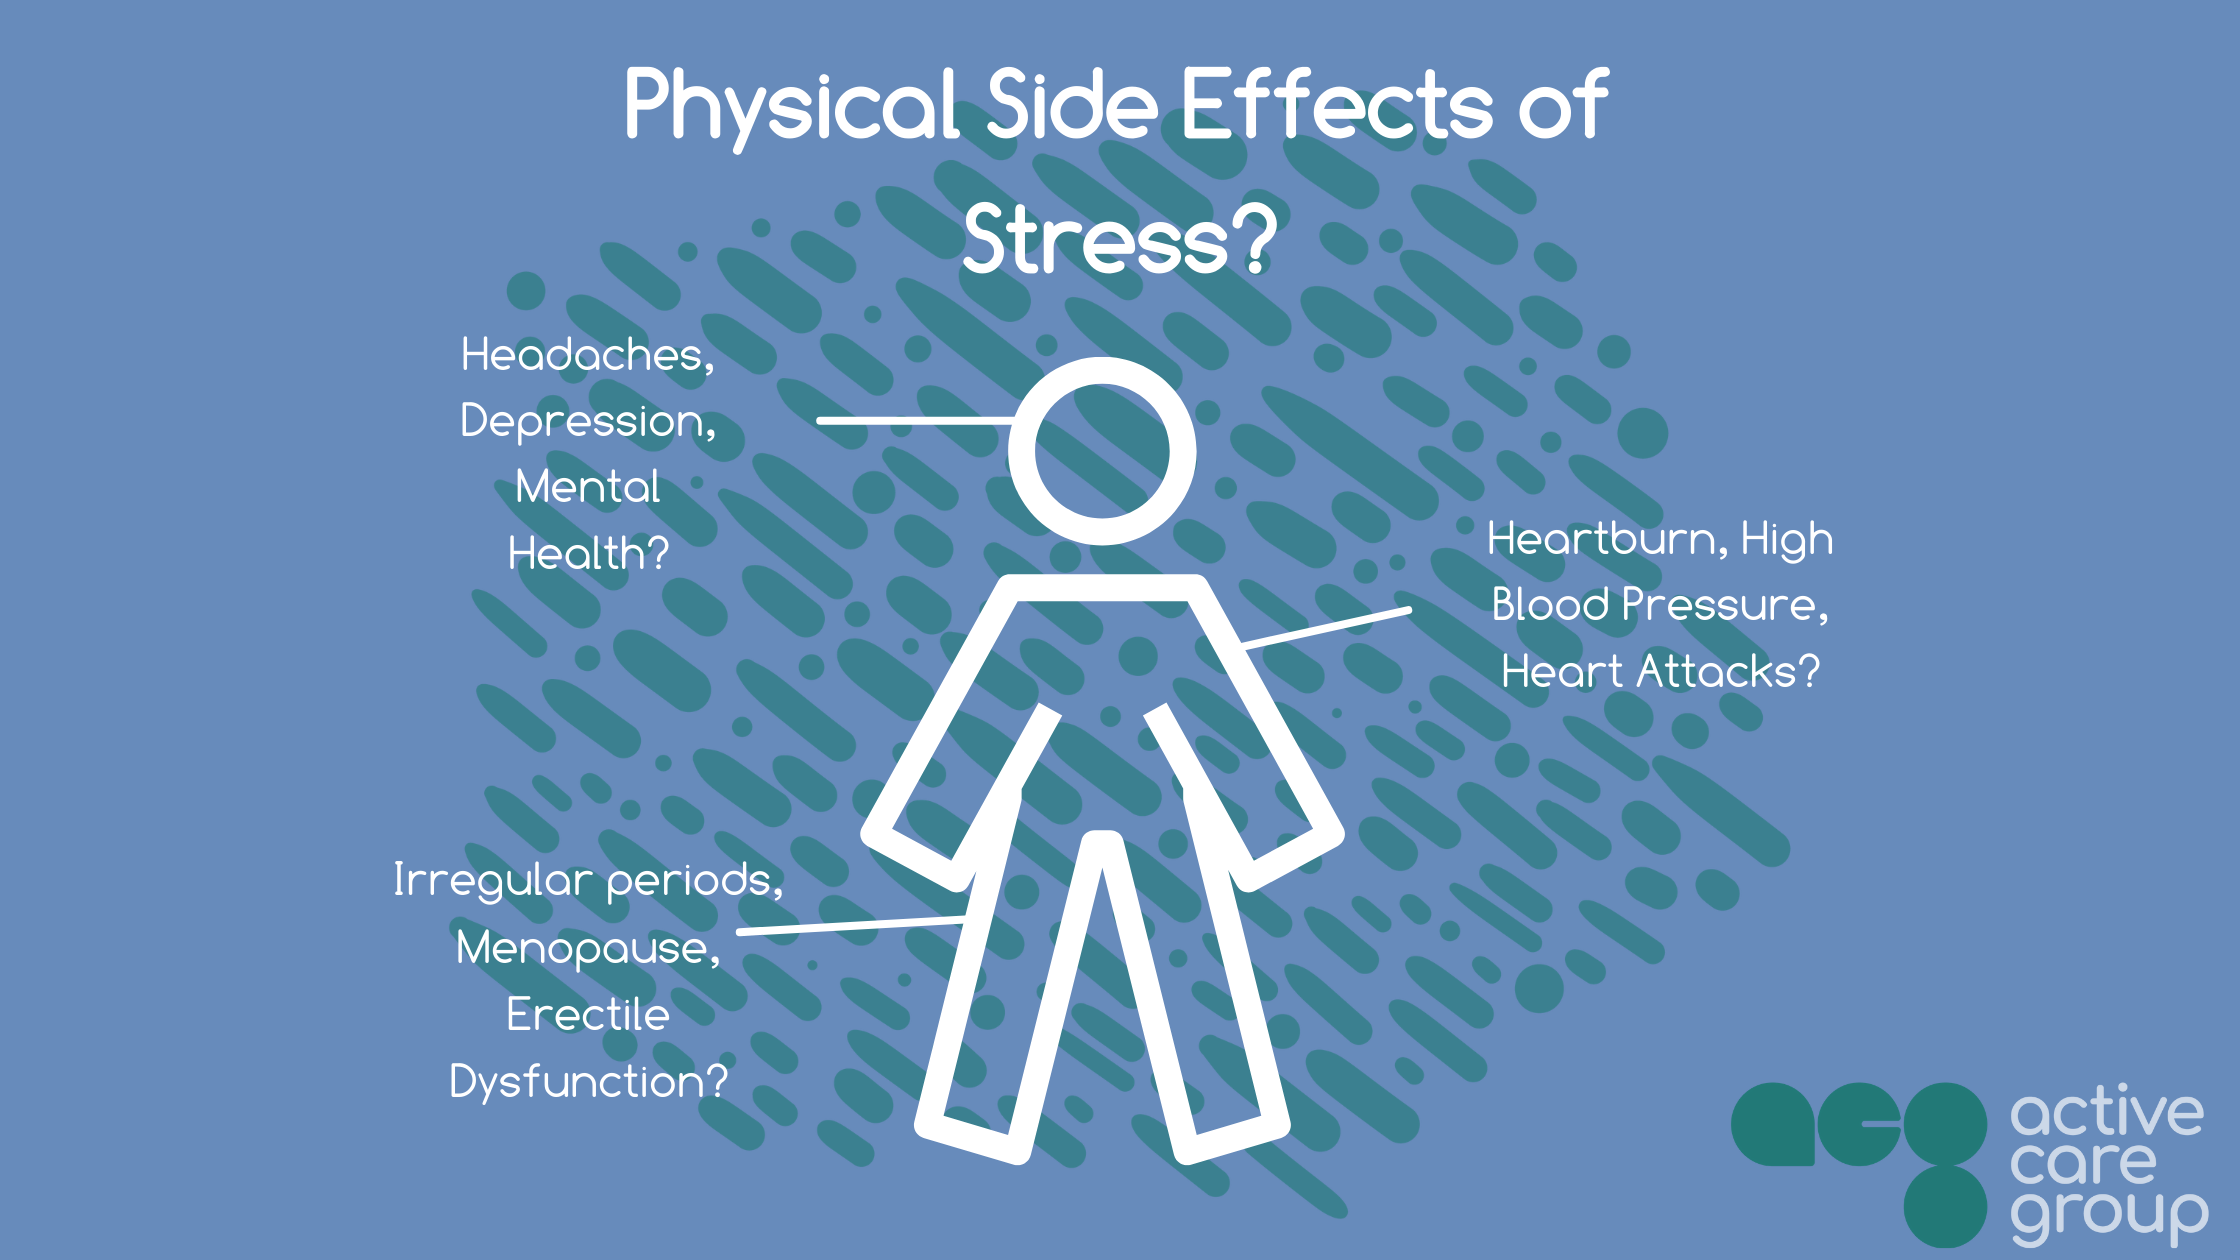 Impact of stress on health